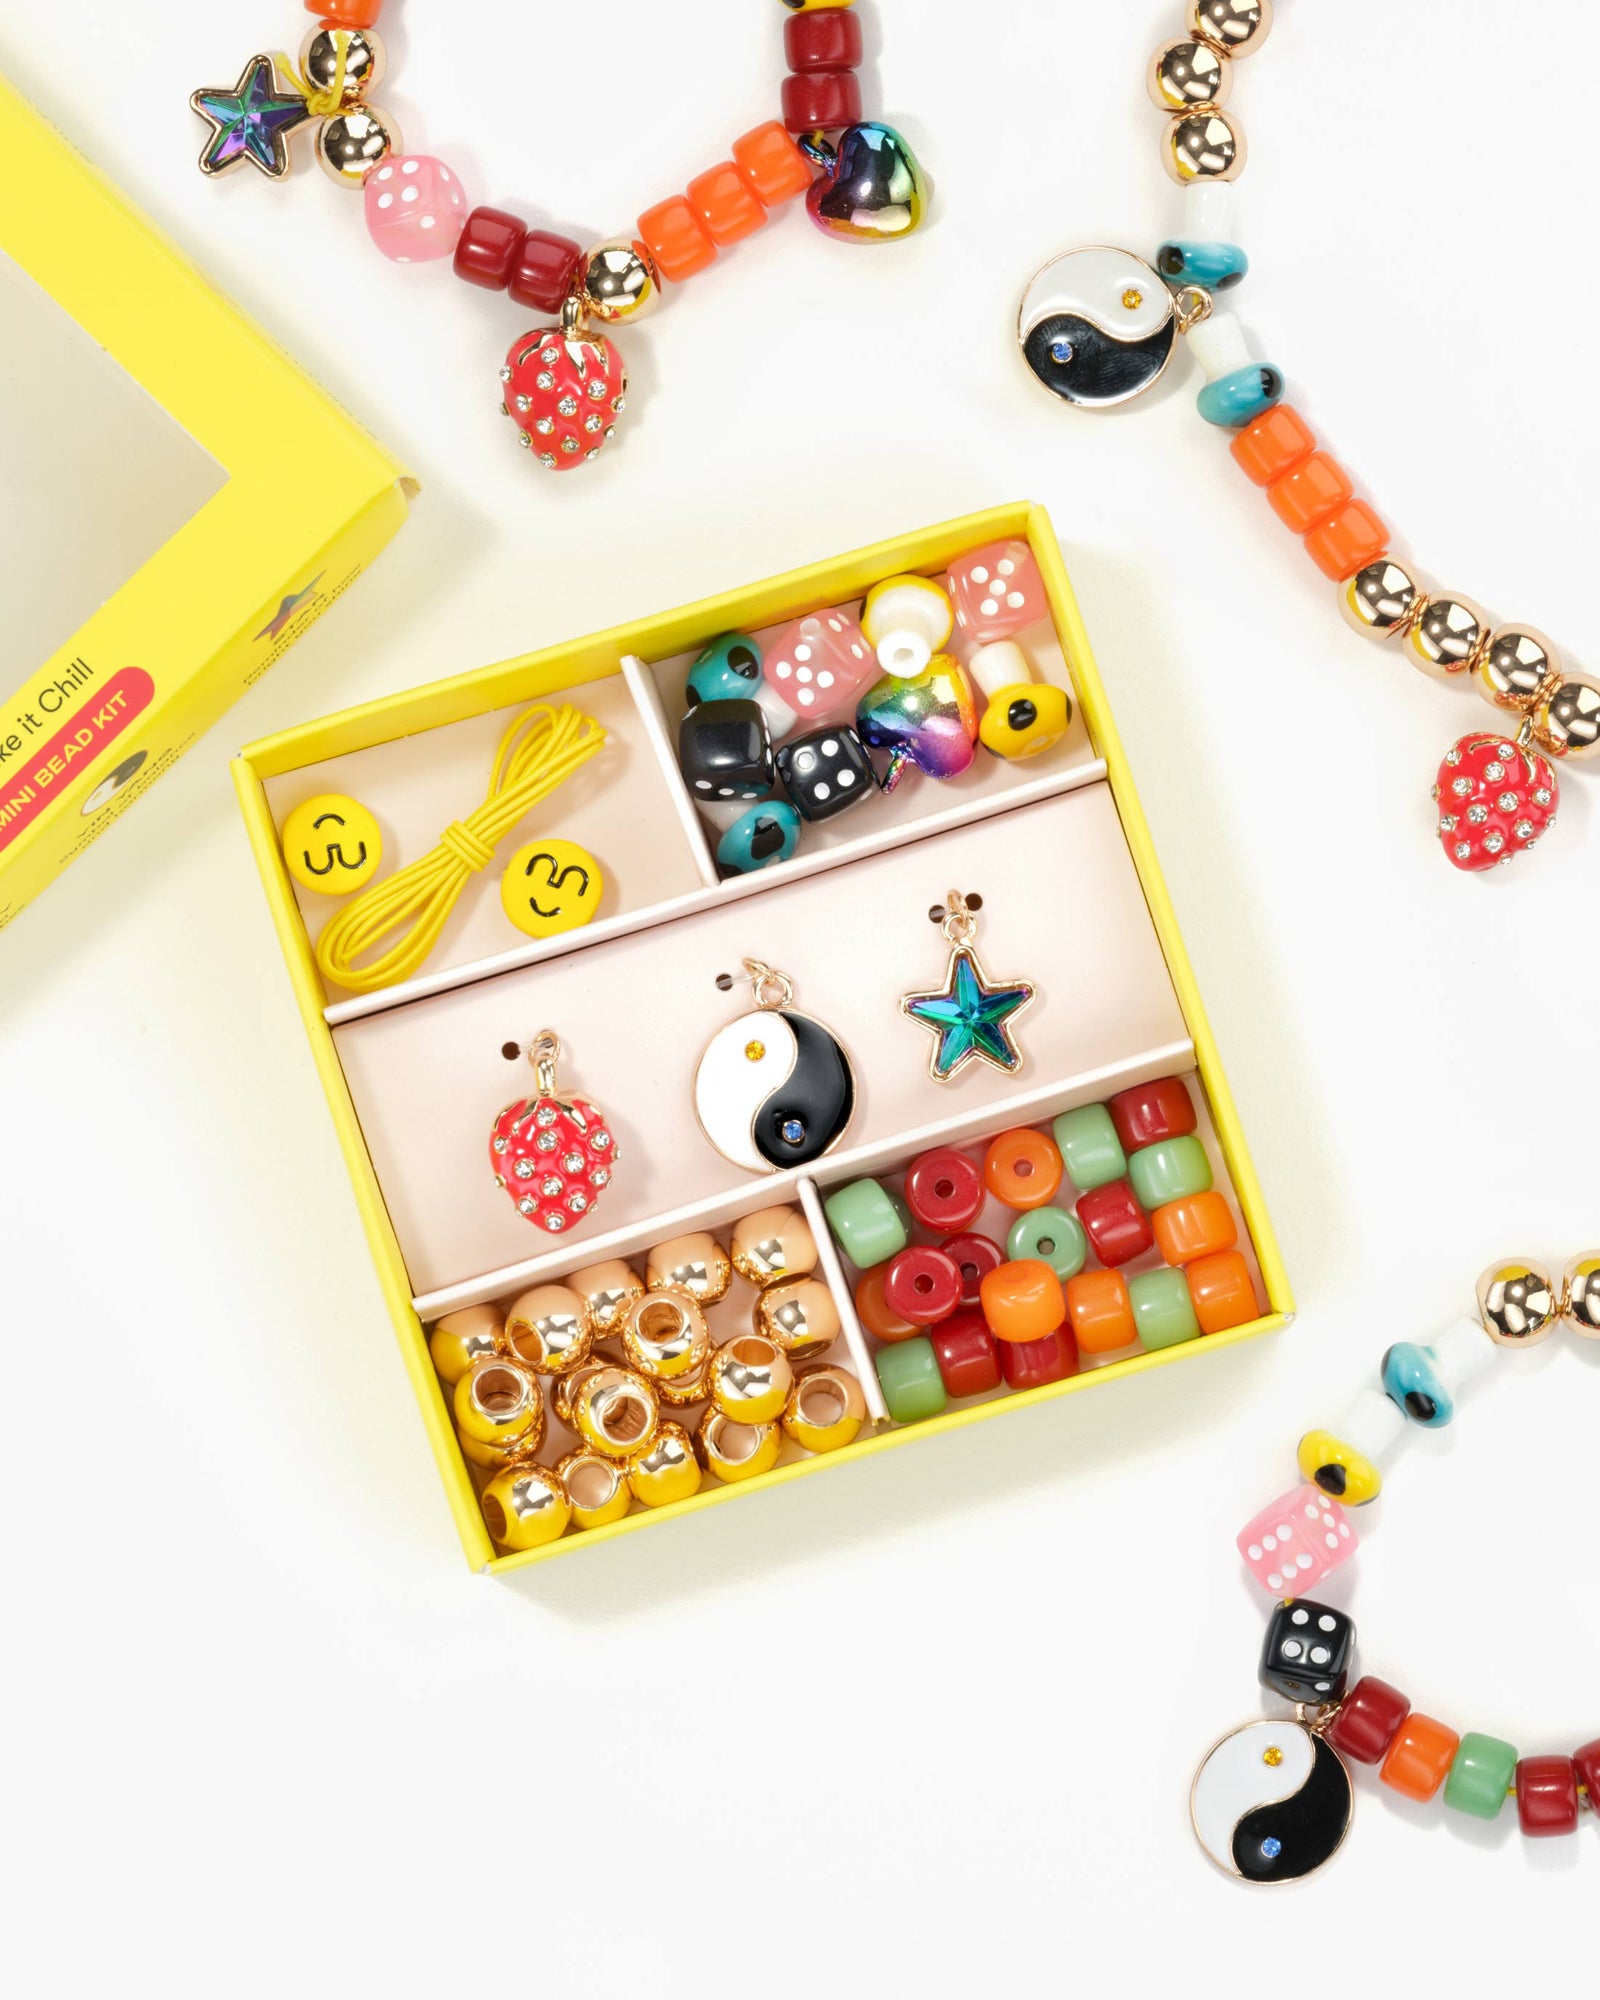  Mermaid Jewelry Box DIY Kits for Kids - Make Your Own